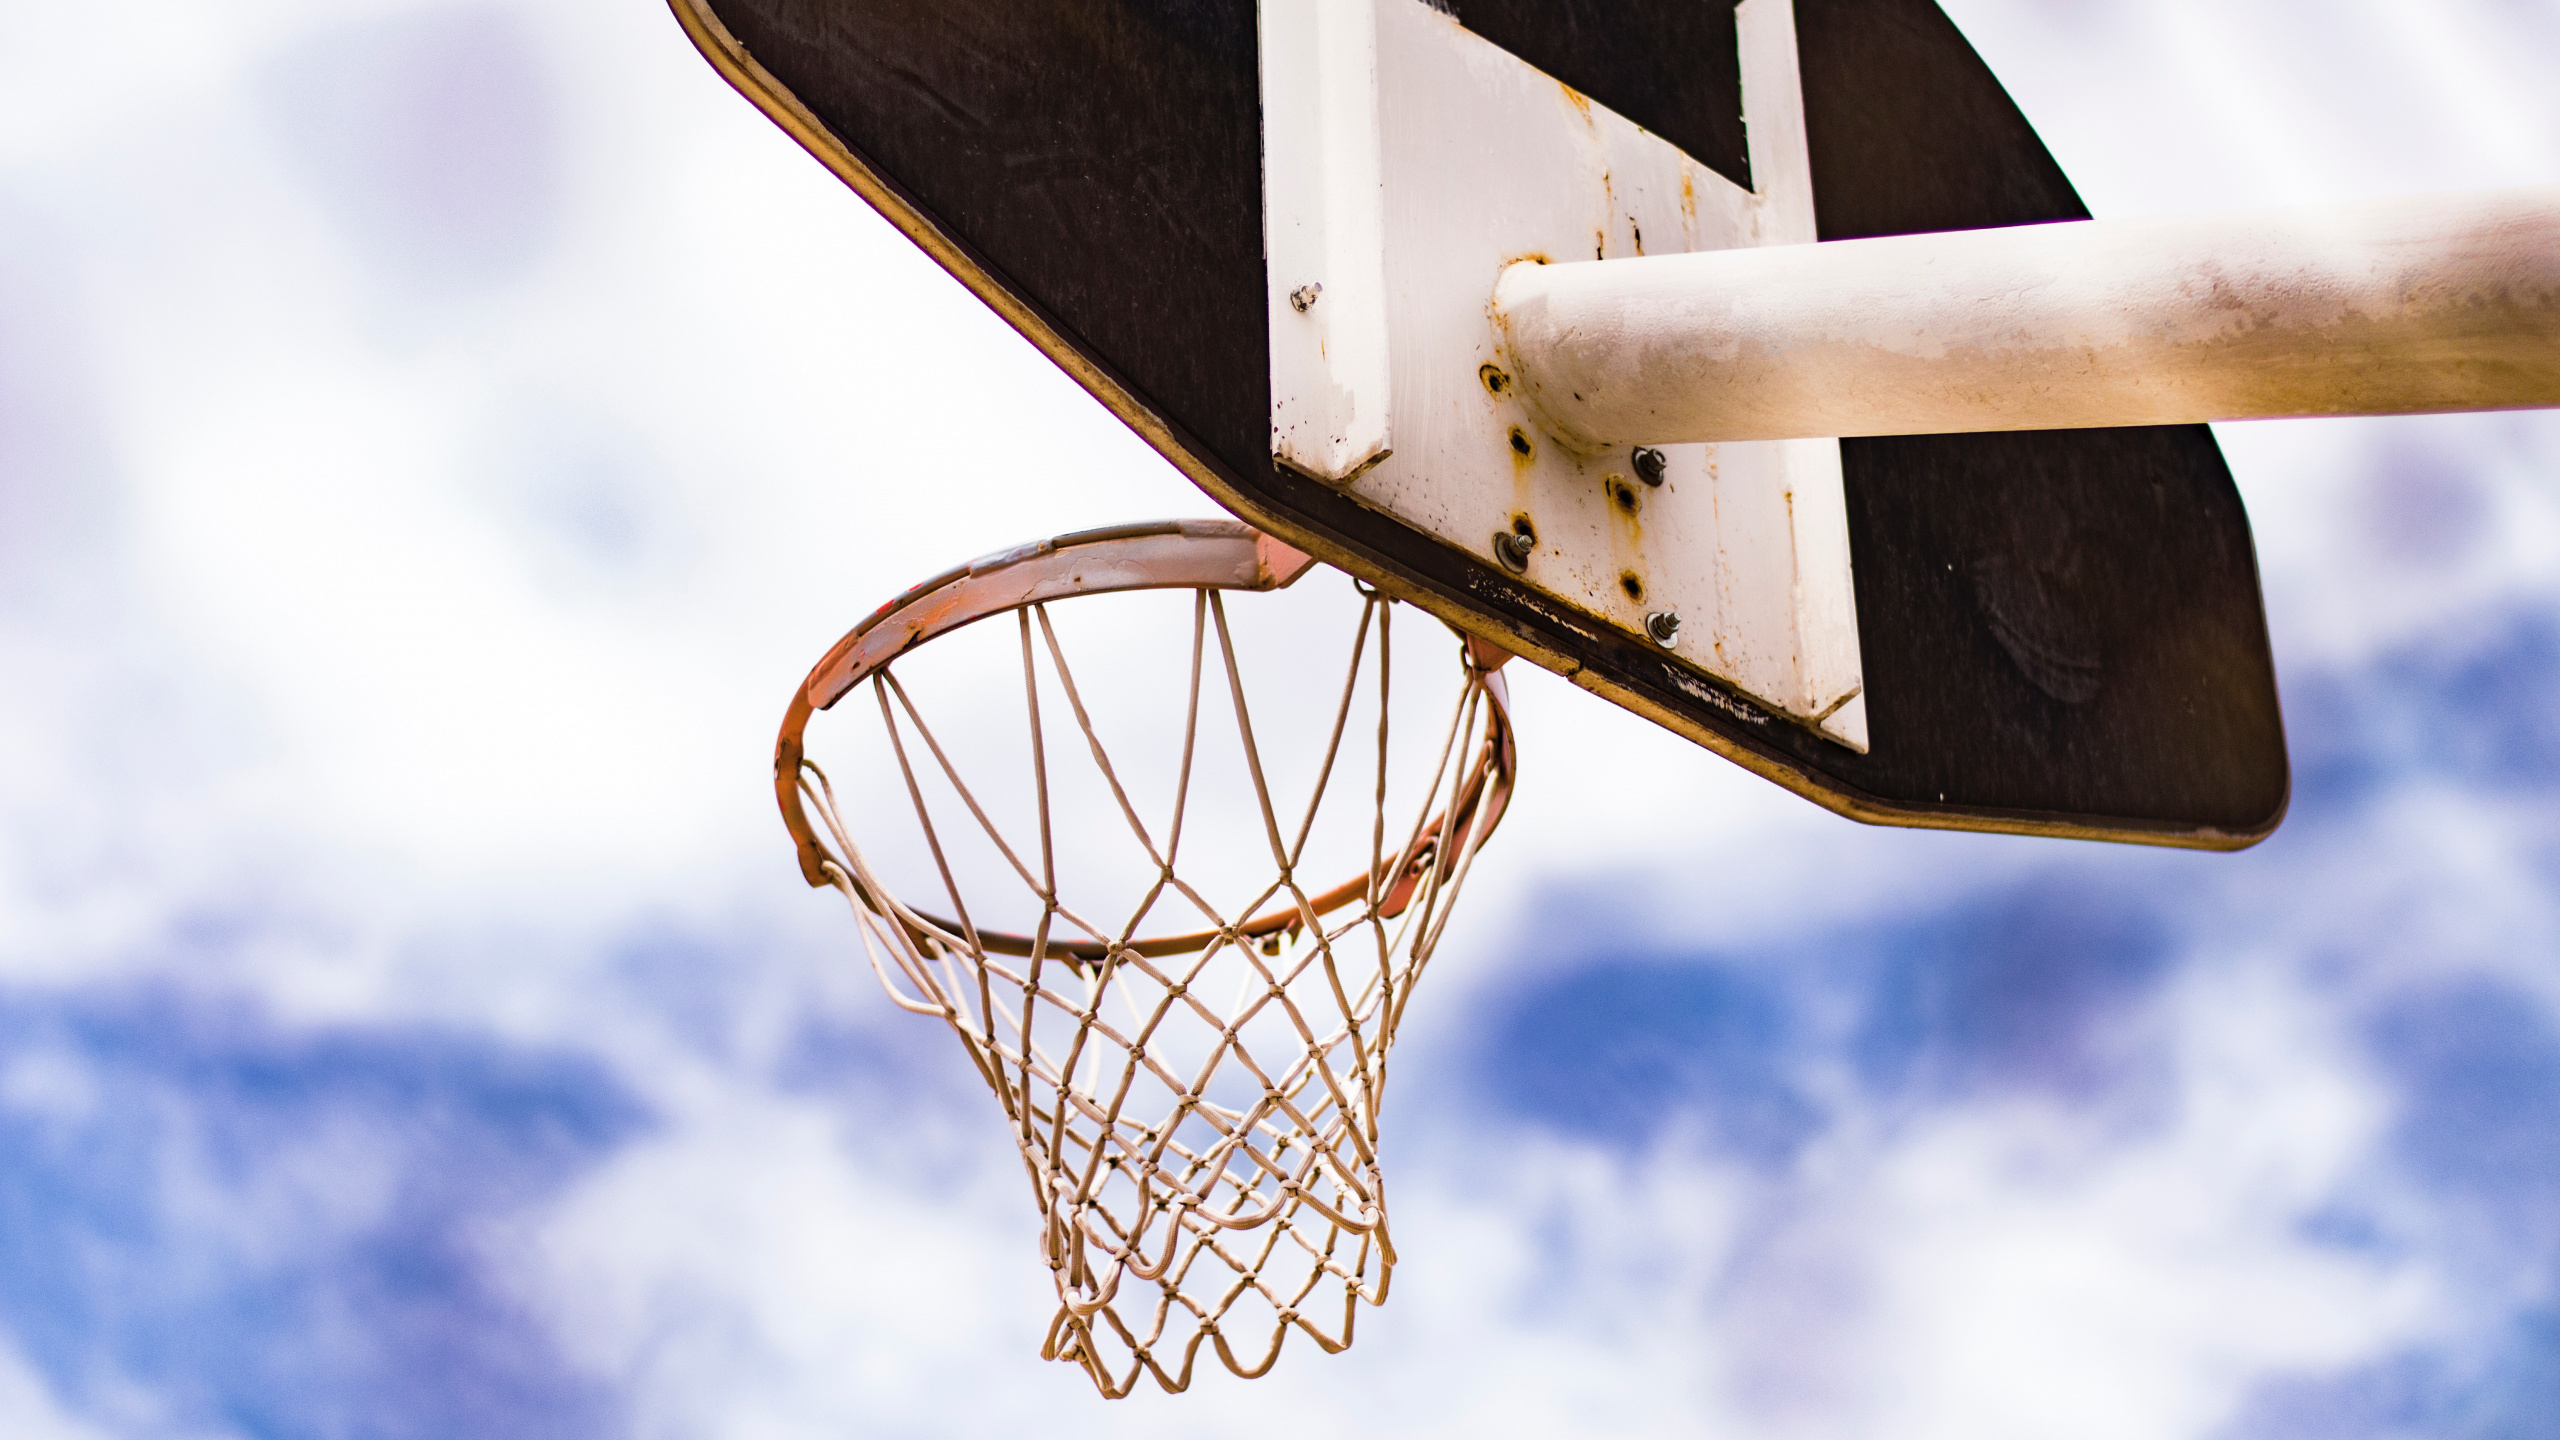 White Basketball Hoop Under Blue Sky During Daytime. Wallpaper in 2560x1440 Resolution